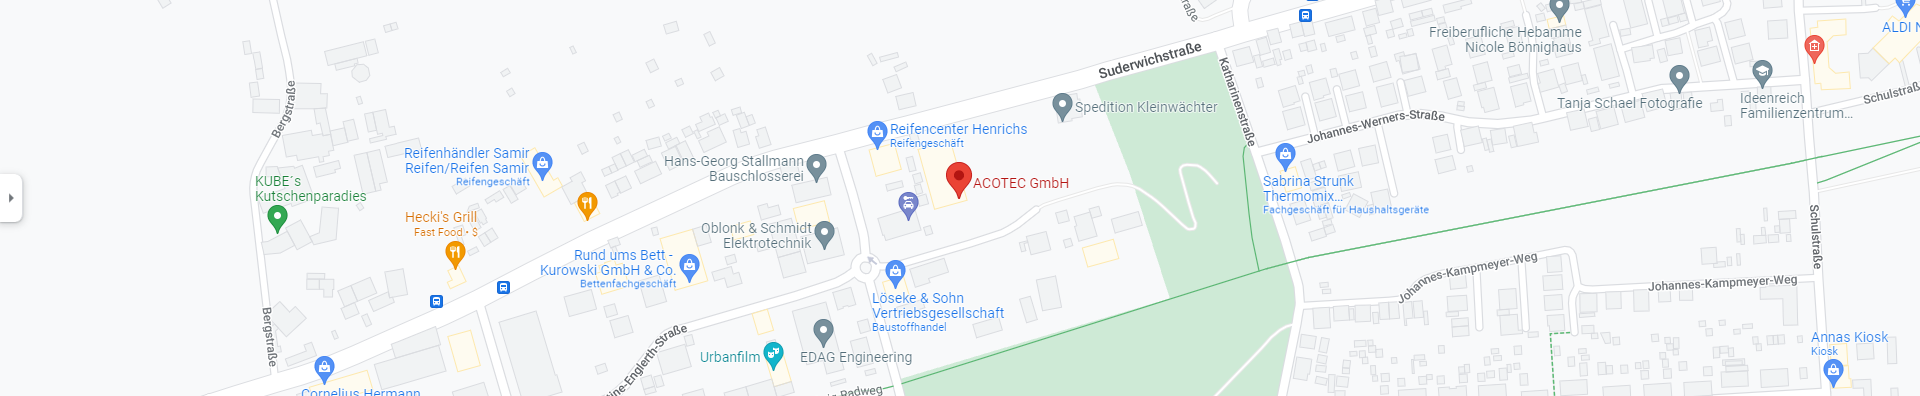 ACOTEC GmbH - Standort - Bildquelle: Google Maps